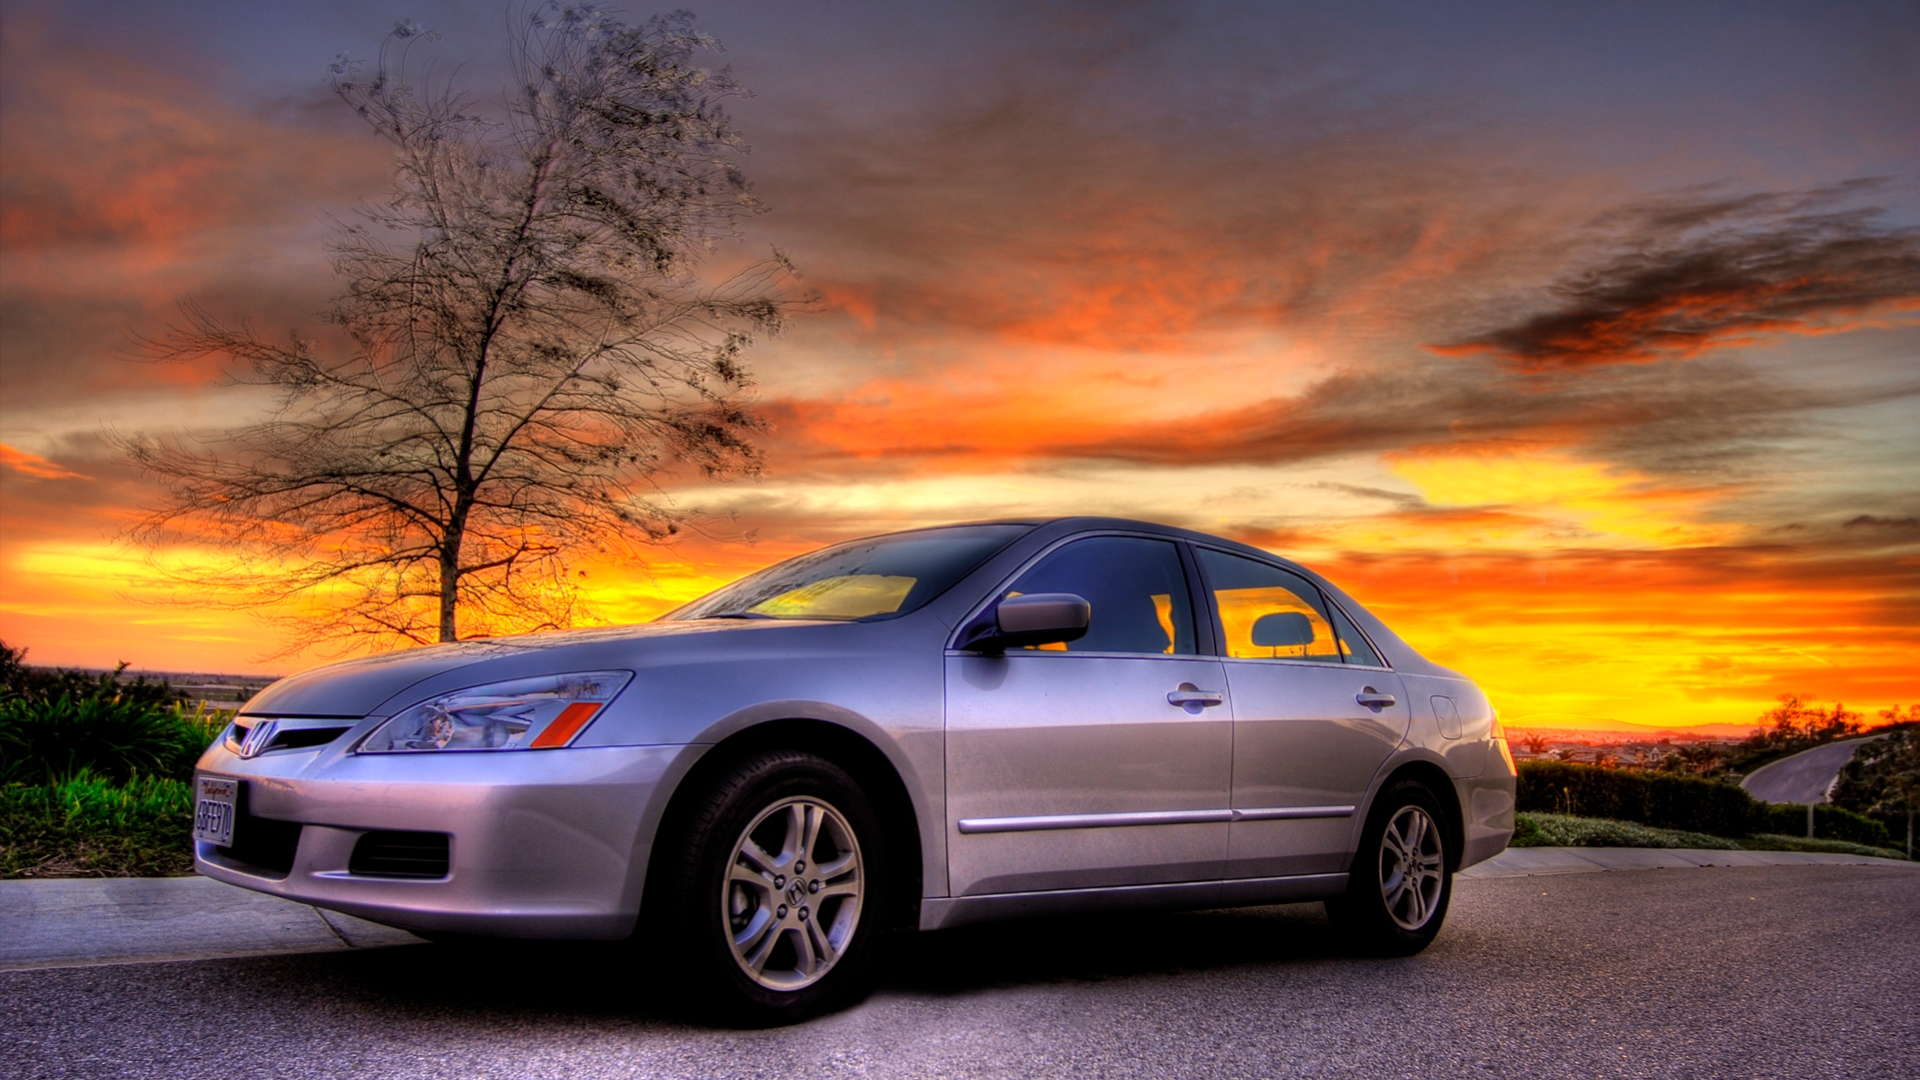 Vehicles Honda Accord HD Wallpaper | Background Image